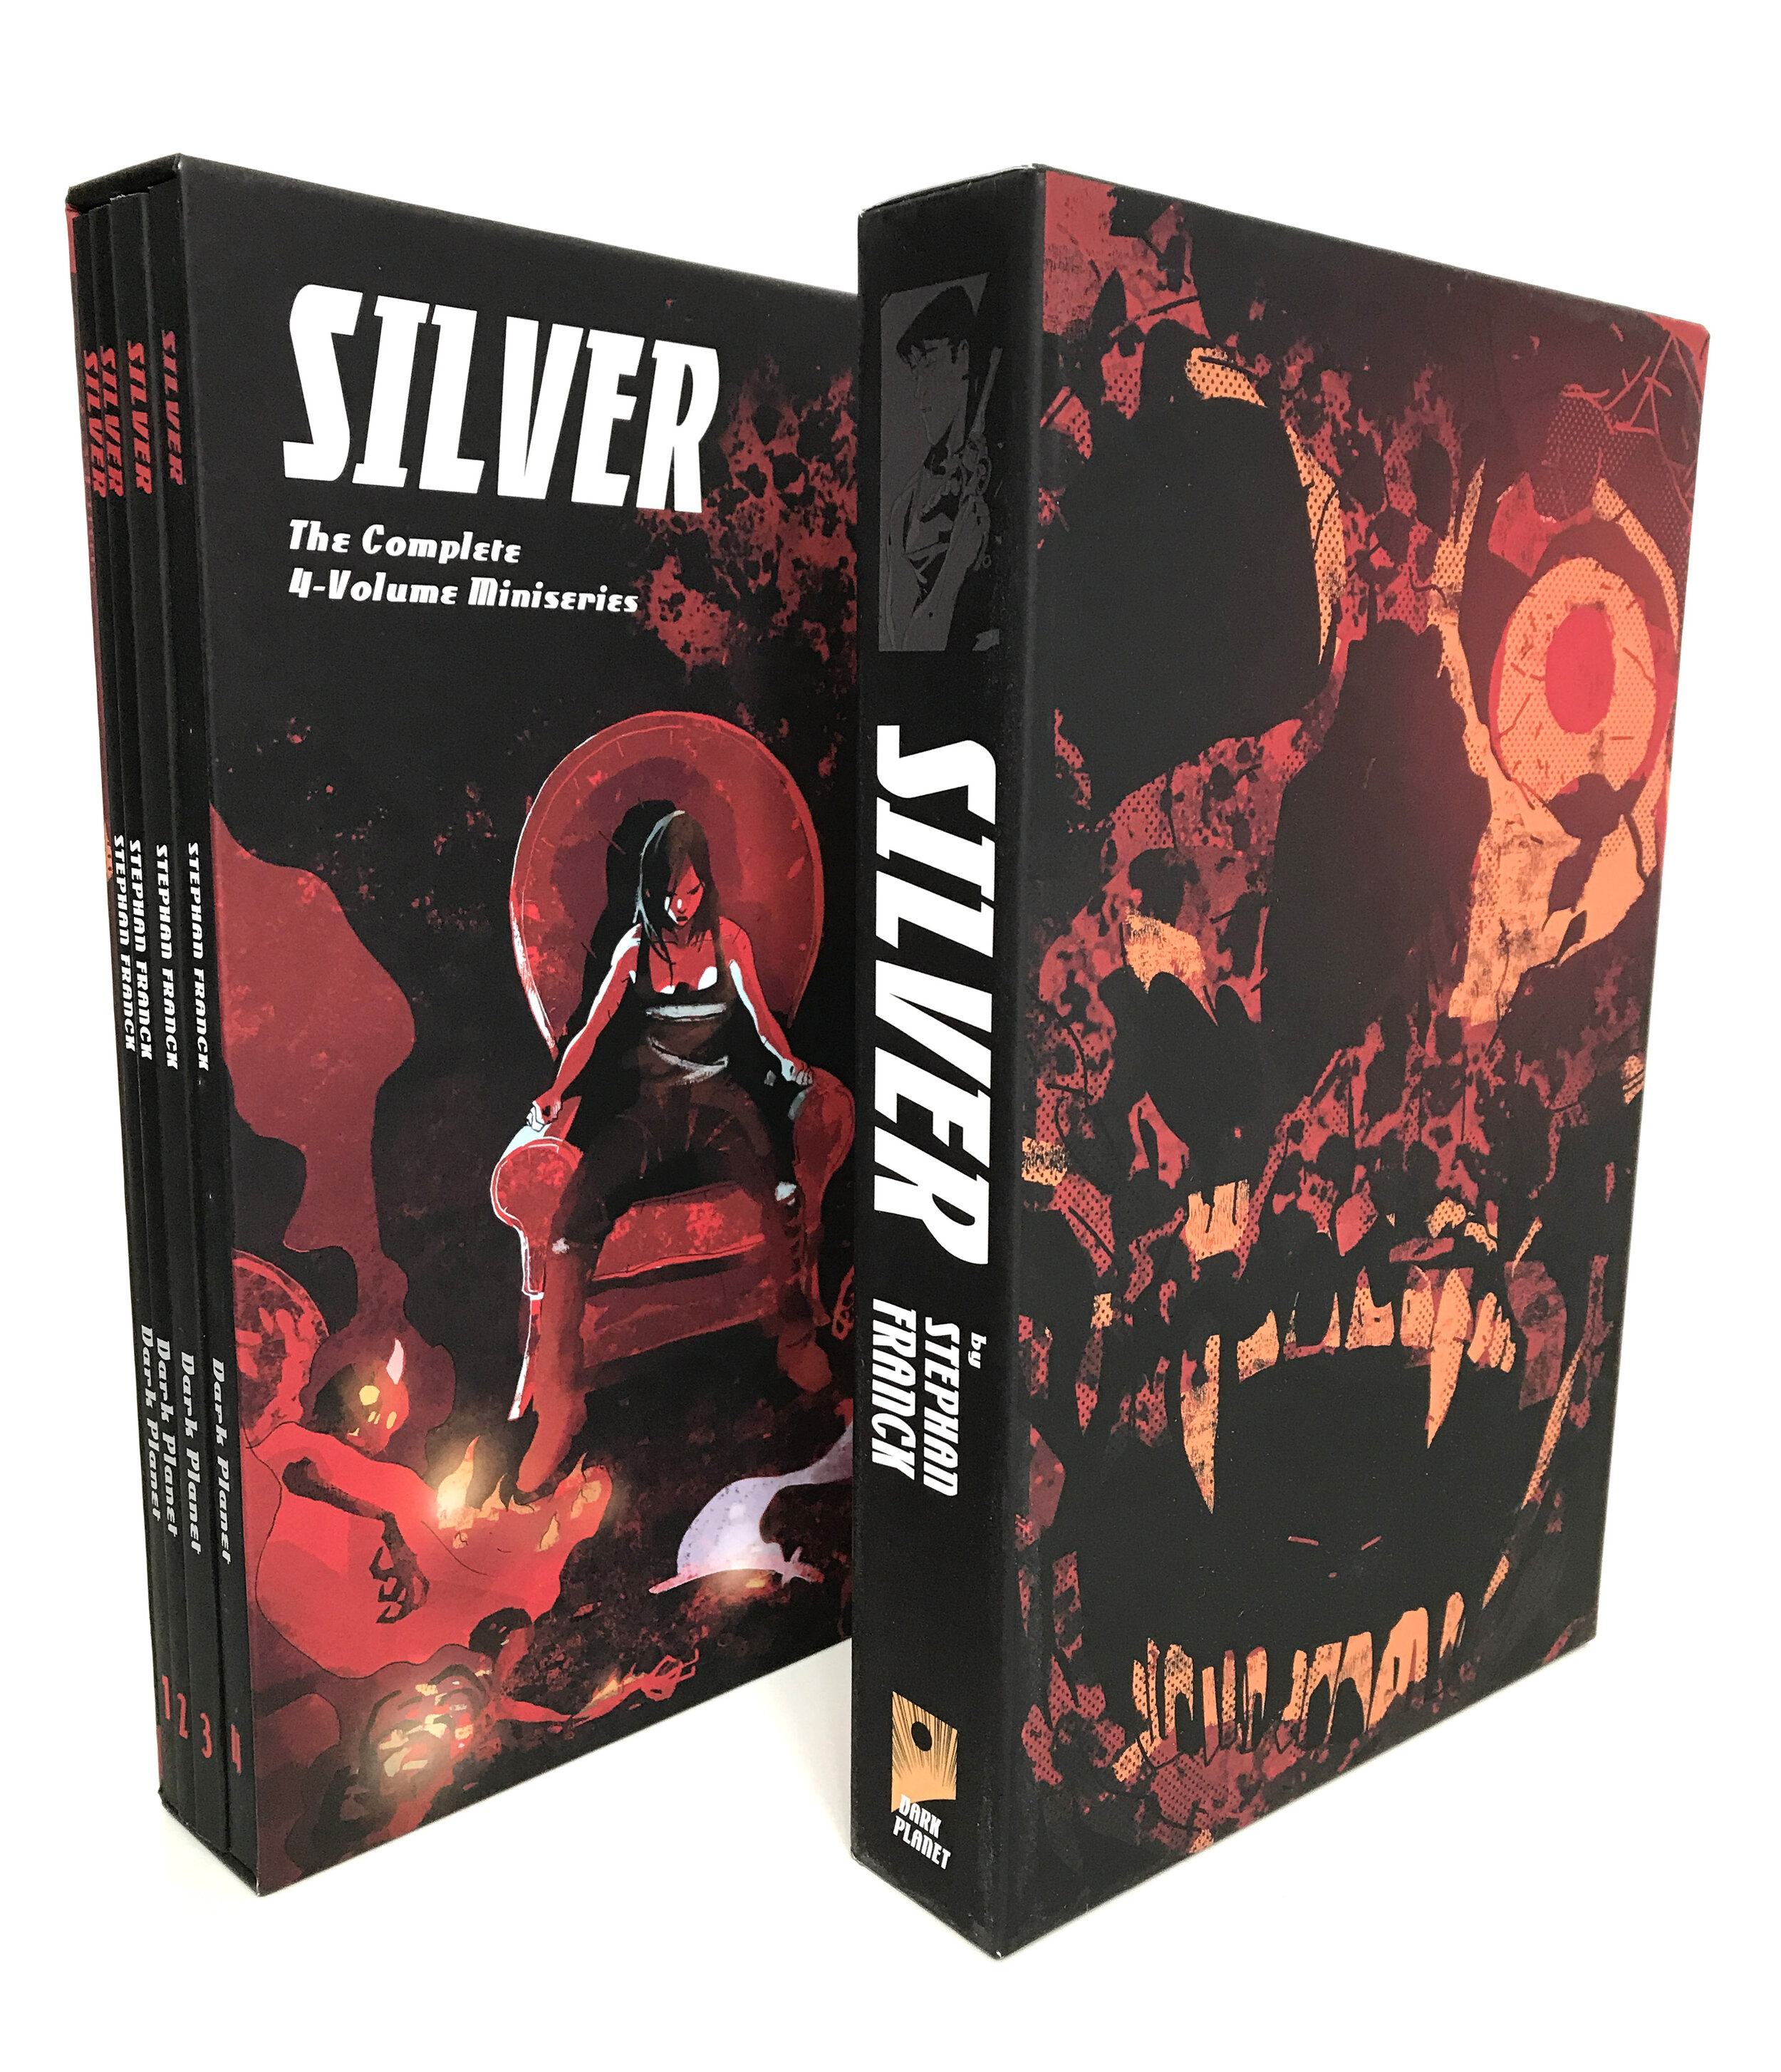 Silver Vol. 1-4 Boxset